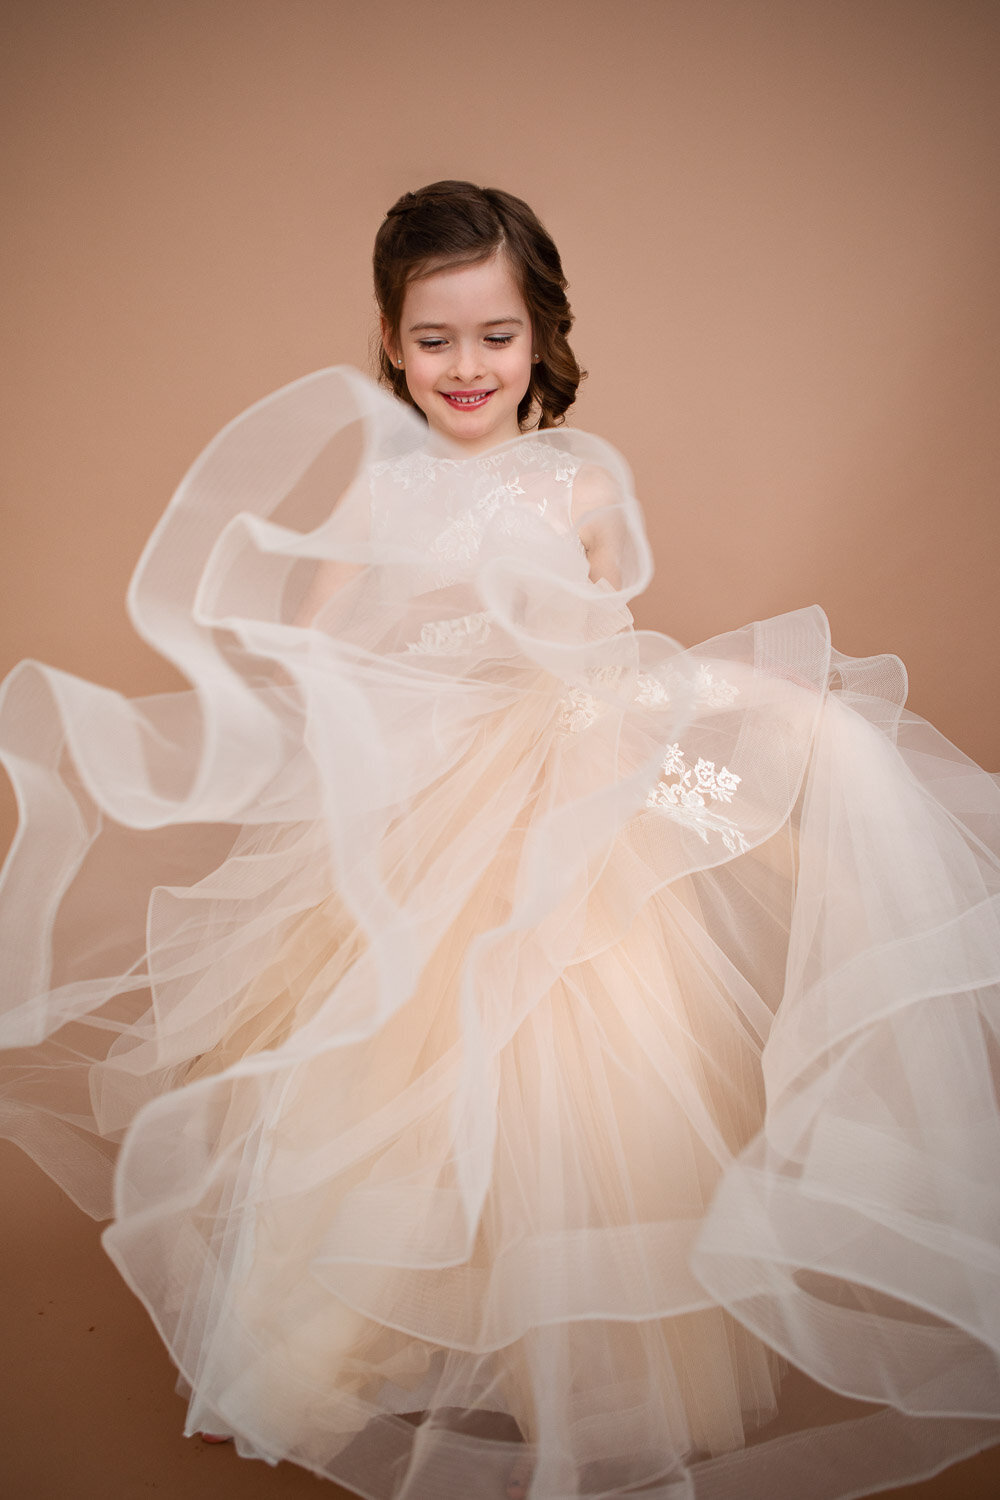 Little girl spinning in a long dress